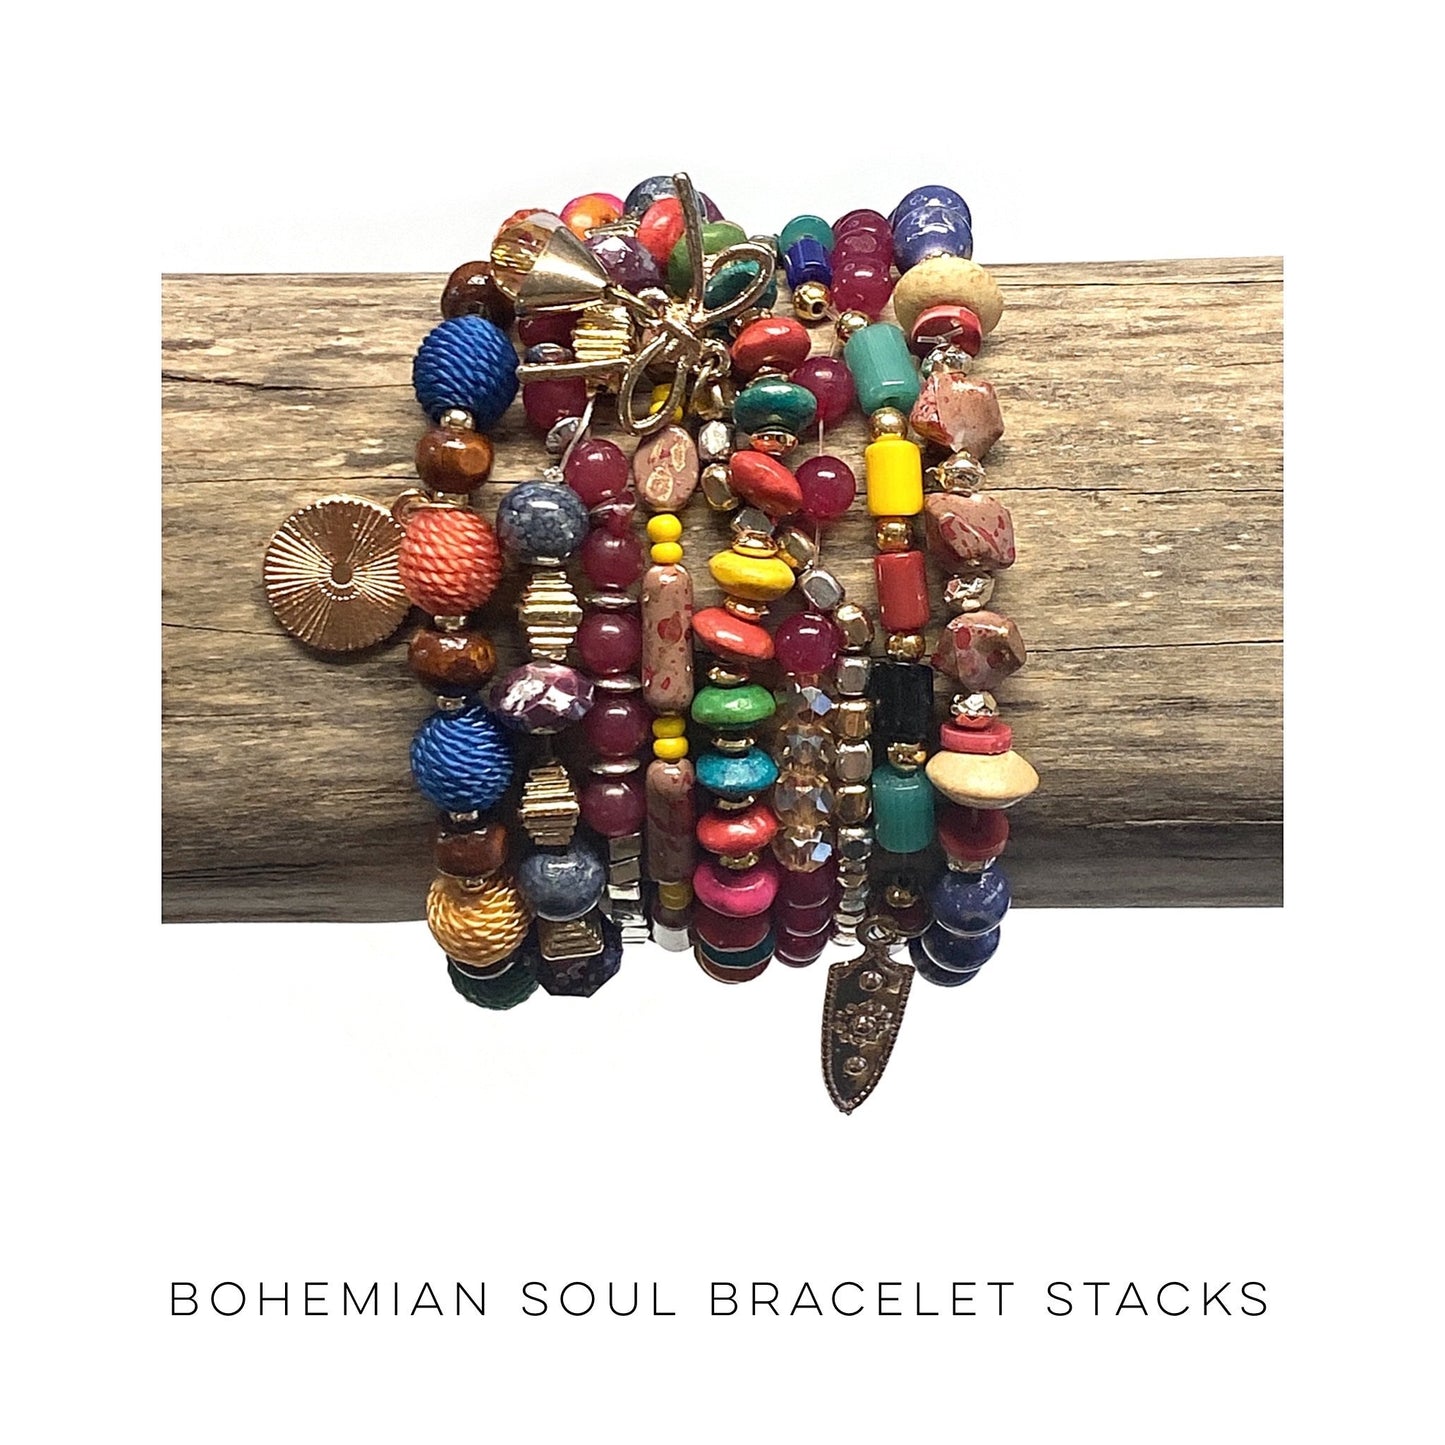 Bohemian Soul Bracelet Stacks!